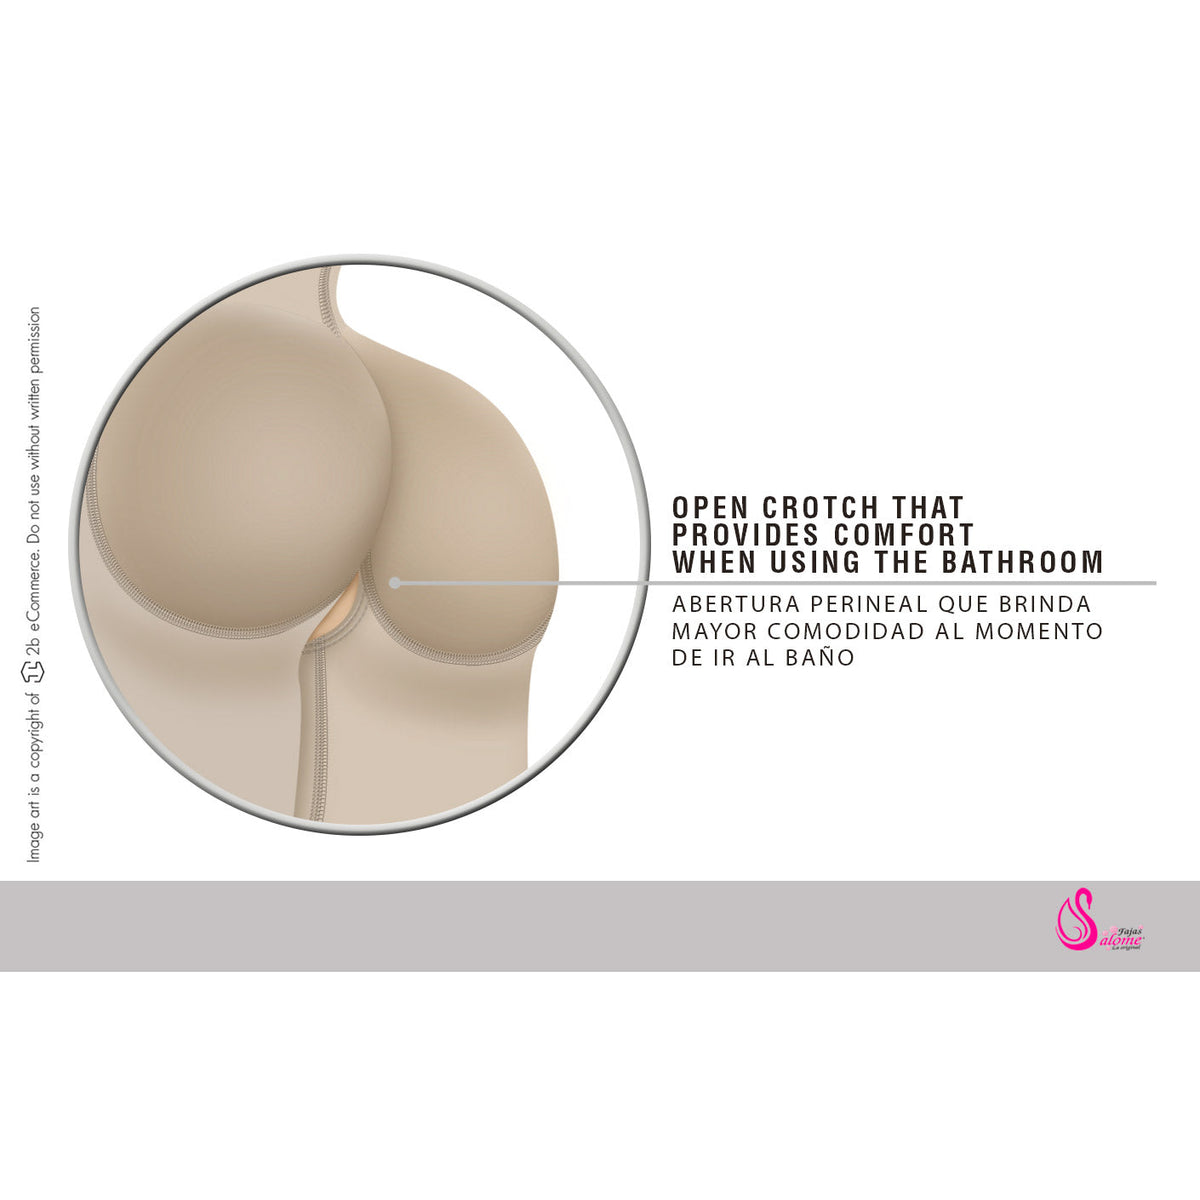 Fajas Salome 0517  Post Surgery Stage 1 Butt Lifter Full Bodysuit | Open Bust Knee Length Body Shaper for Women